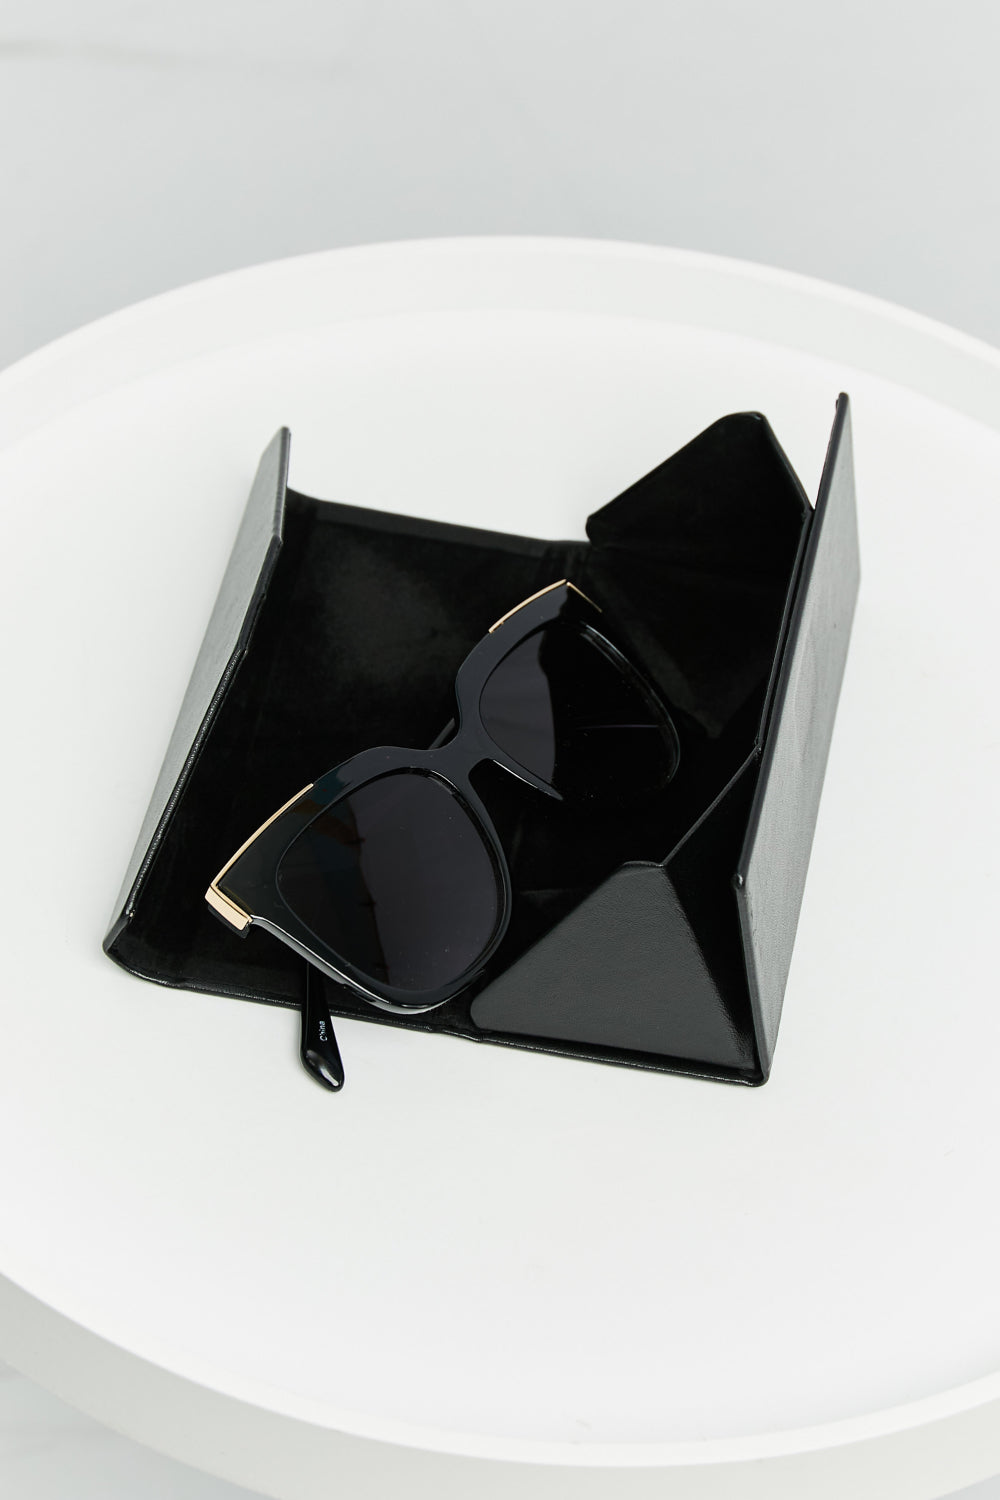 Sunglasses Aesthetic |  Glam TAC Polarization Lens Sunglasses